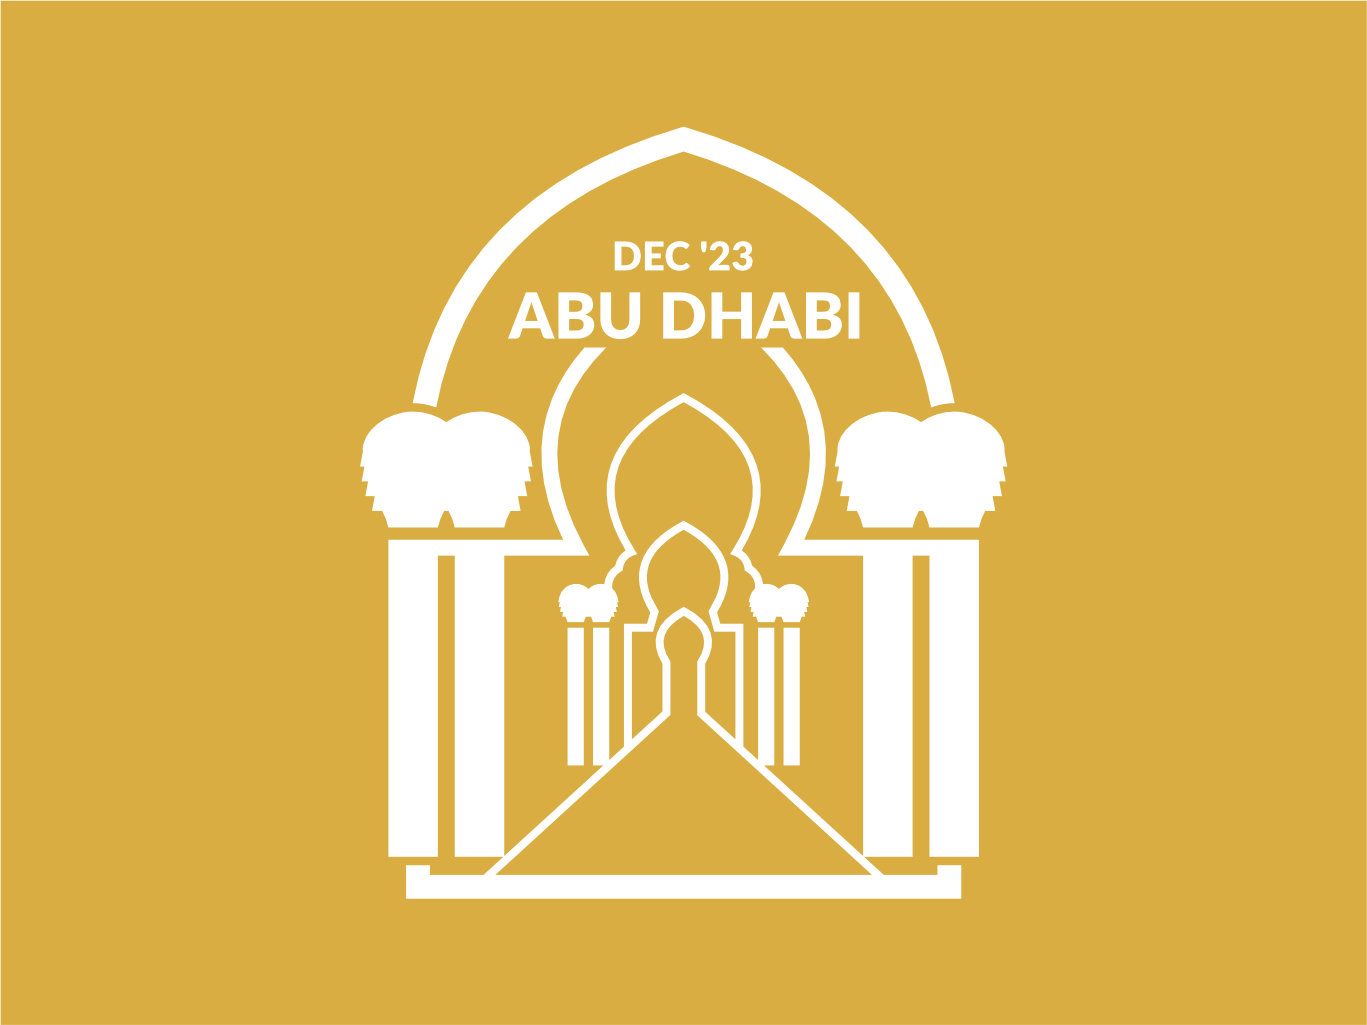 Passport style stamp for Abu Dhabi